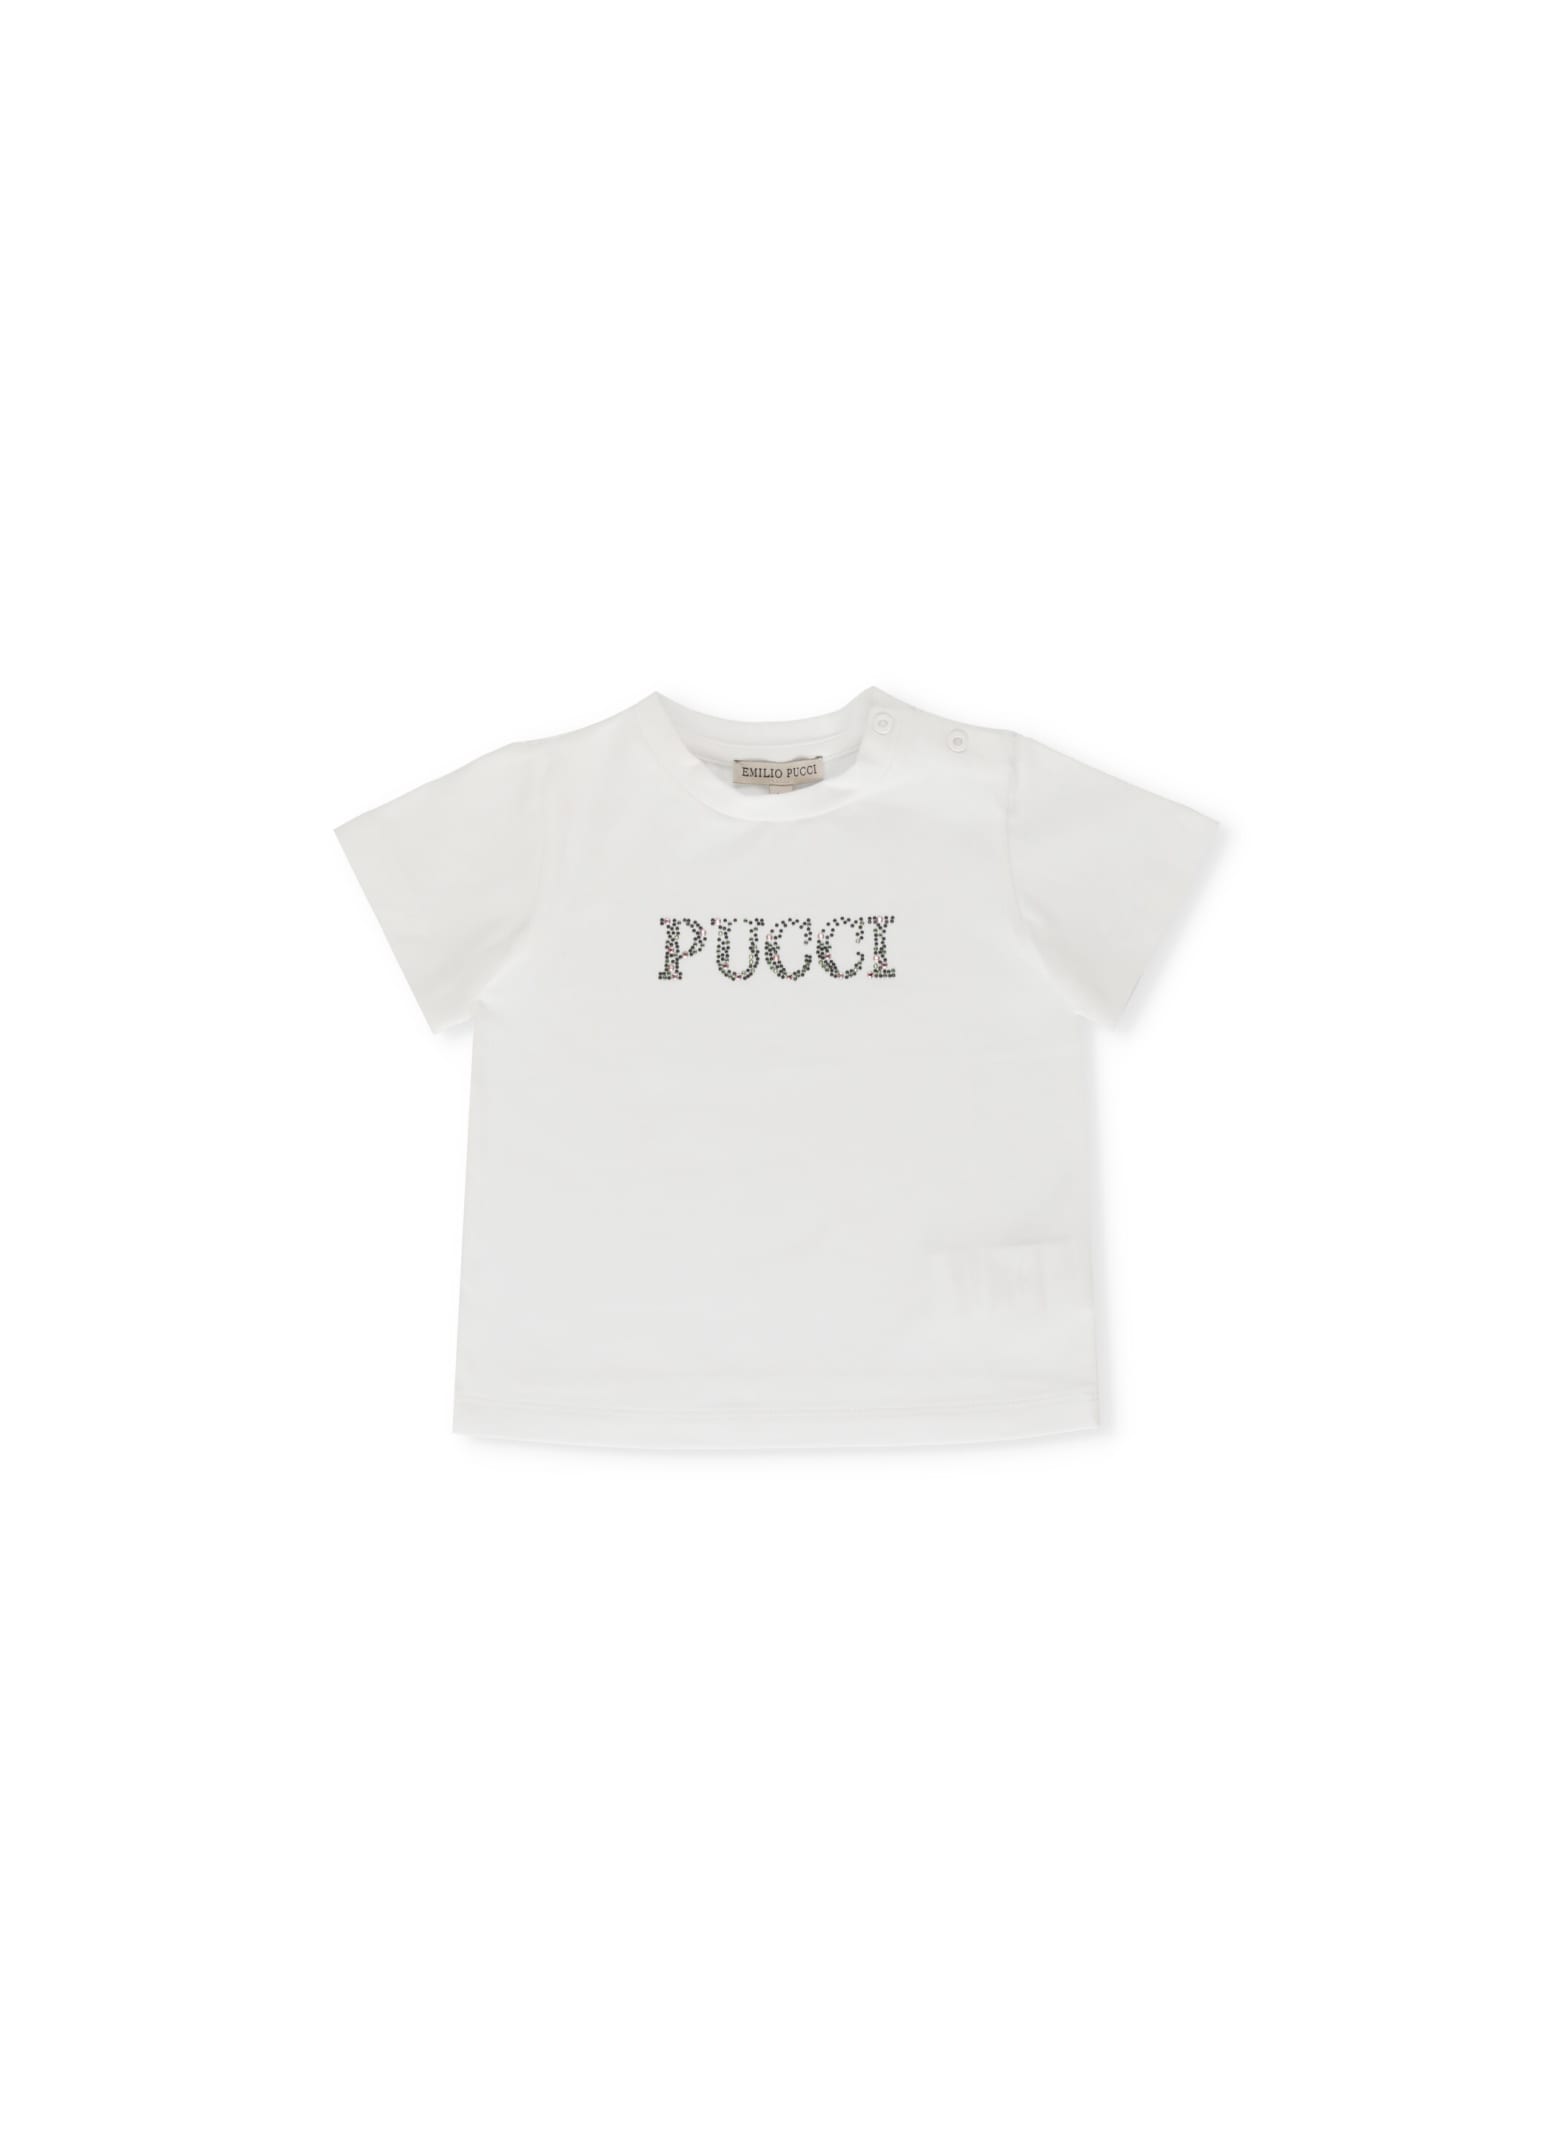 Emilio Pucci T-shirt With Rhinestones